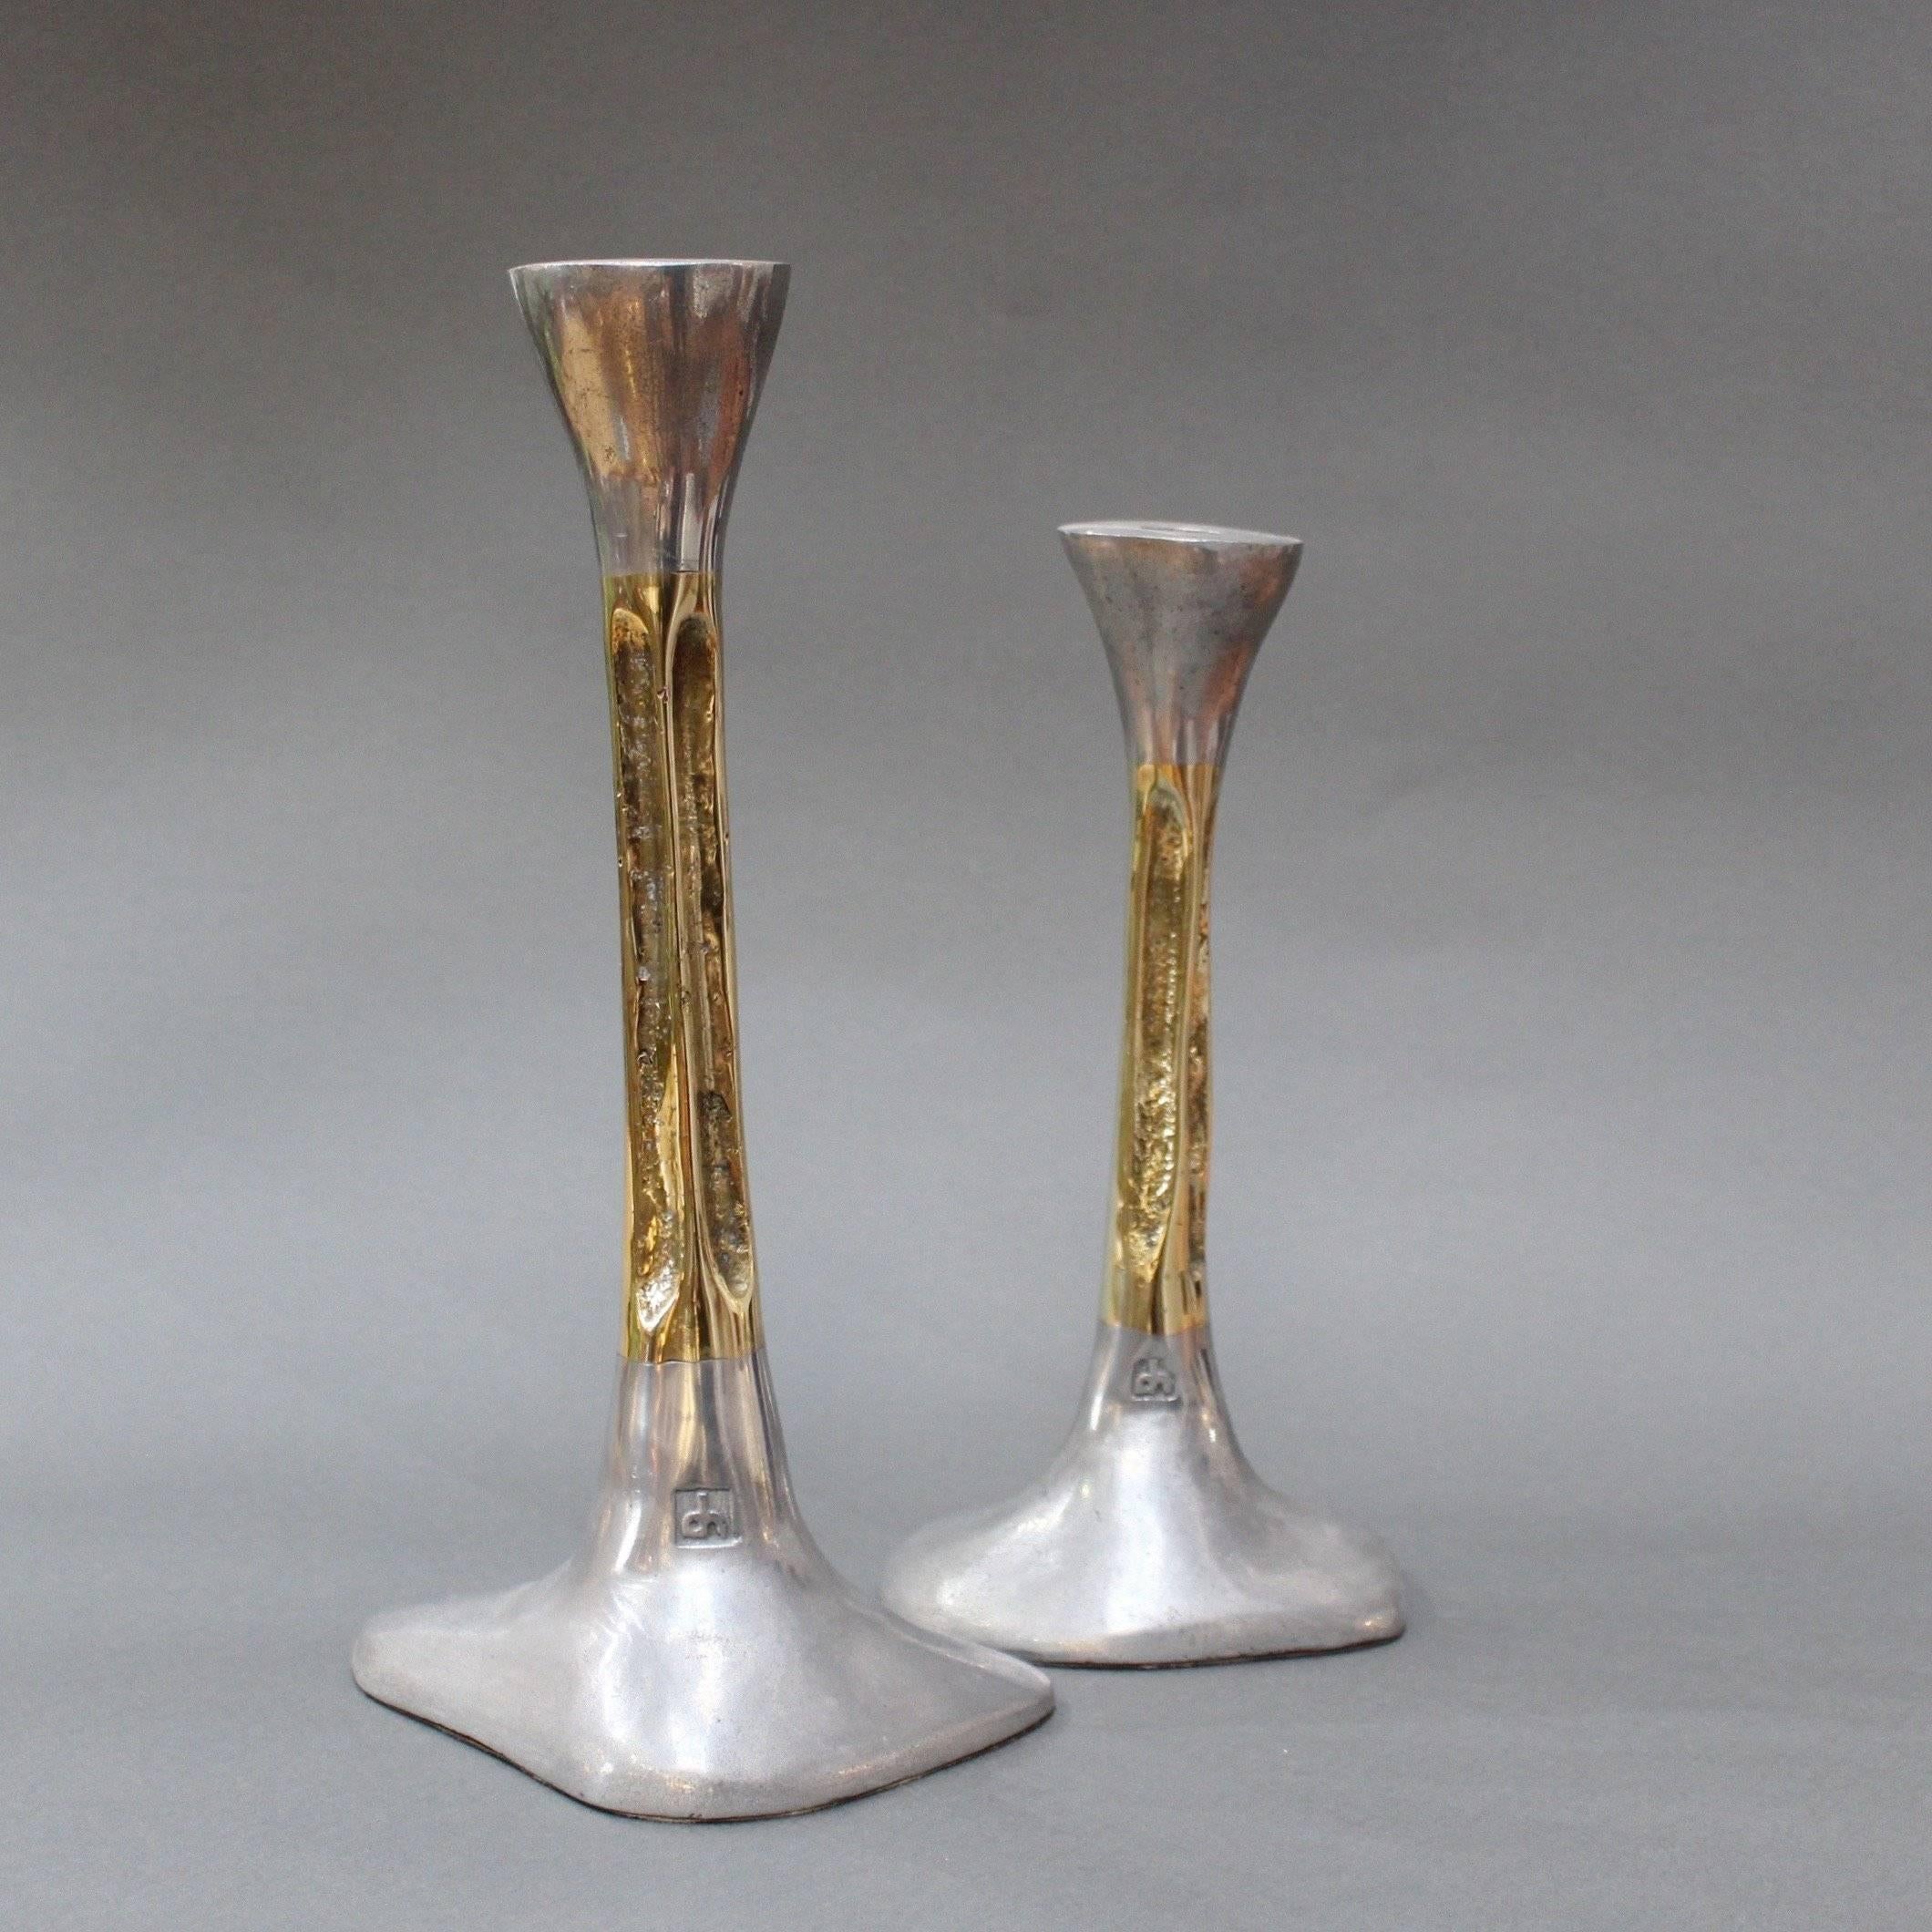 Spanish Pair of Brutalist Style Aluminium and Brass Candlesticks by David Marshall 1980s